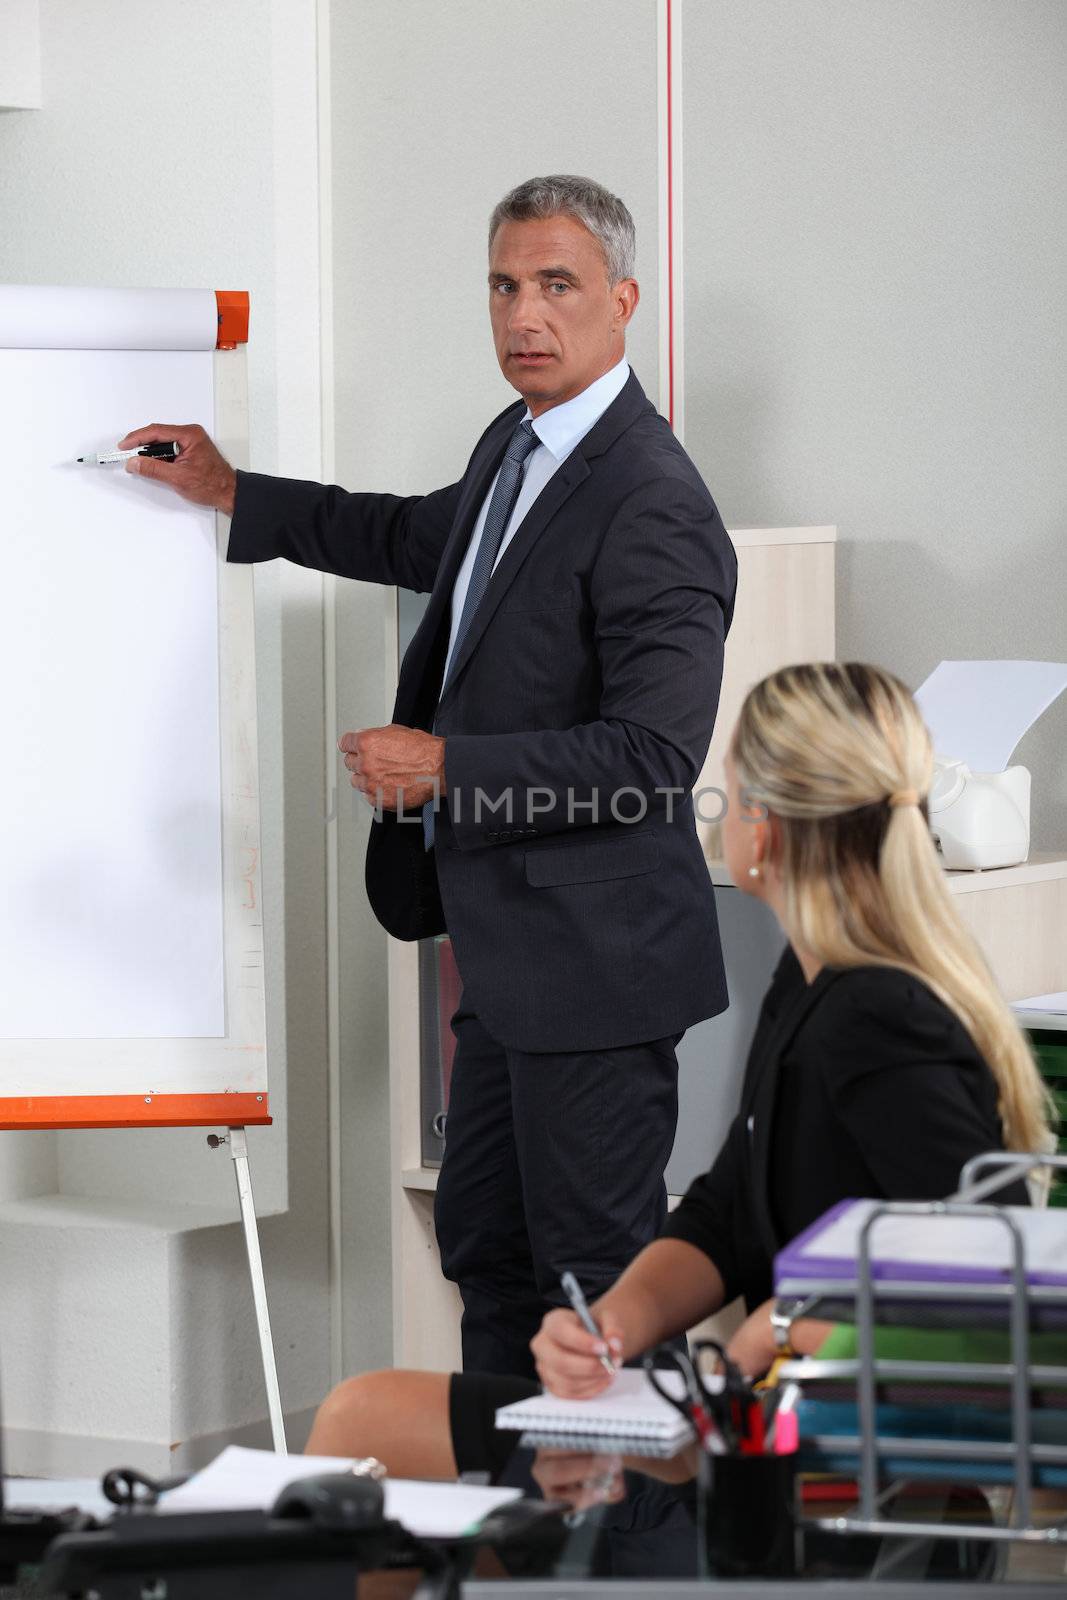 Businessman giving a presentation by phovoir